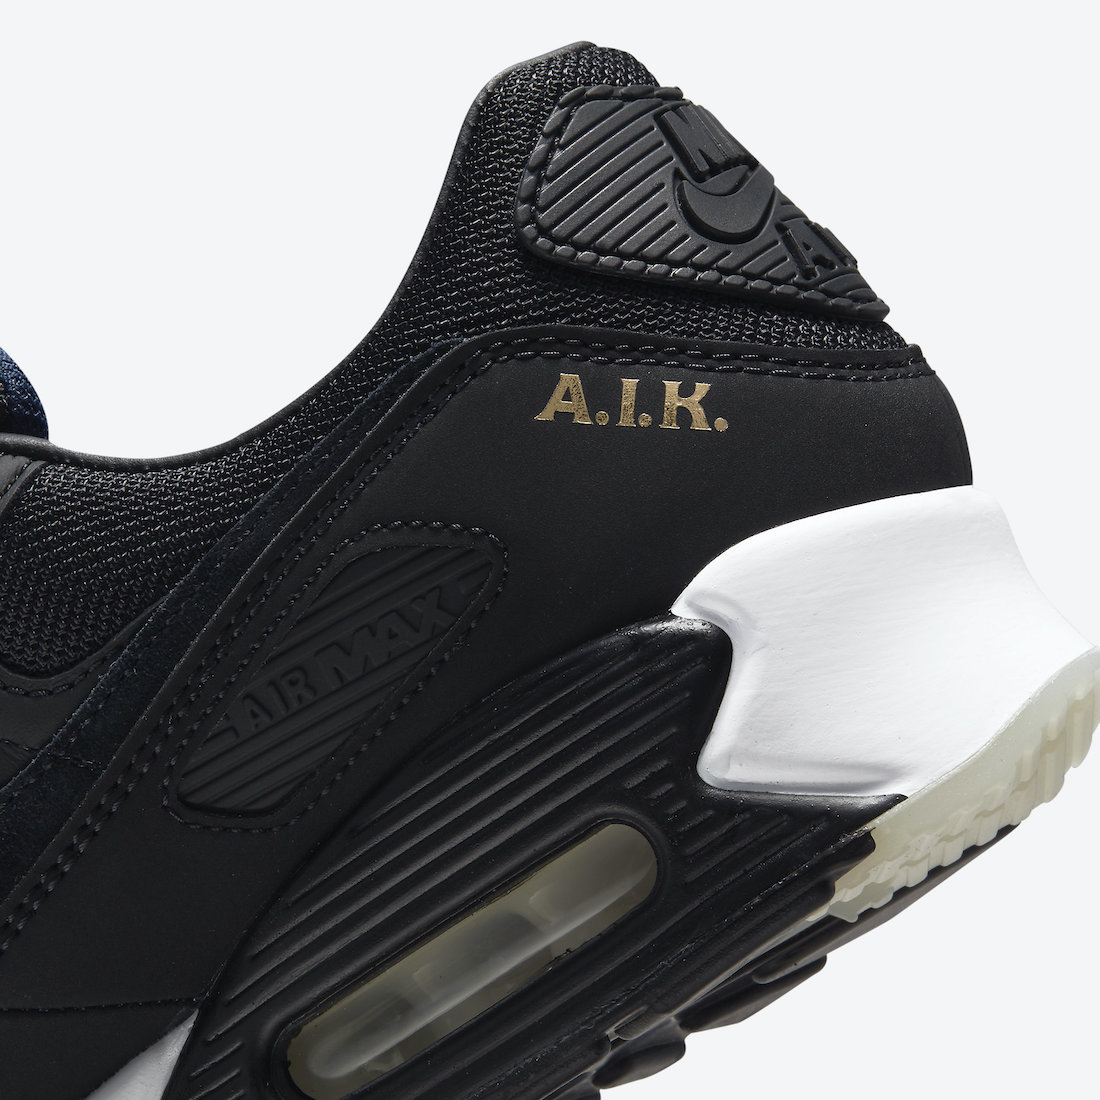 Nike Air Max 90 AIK Fotboll Black Gold DJ4602-001 Release Date Info